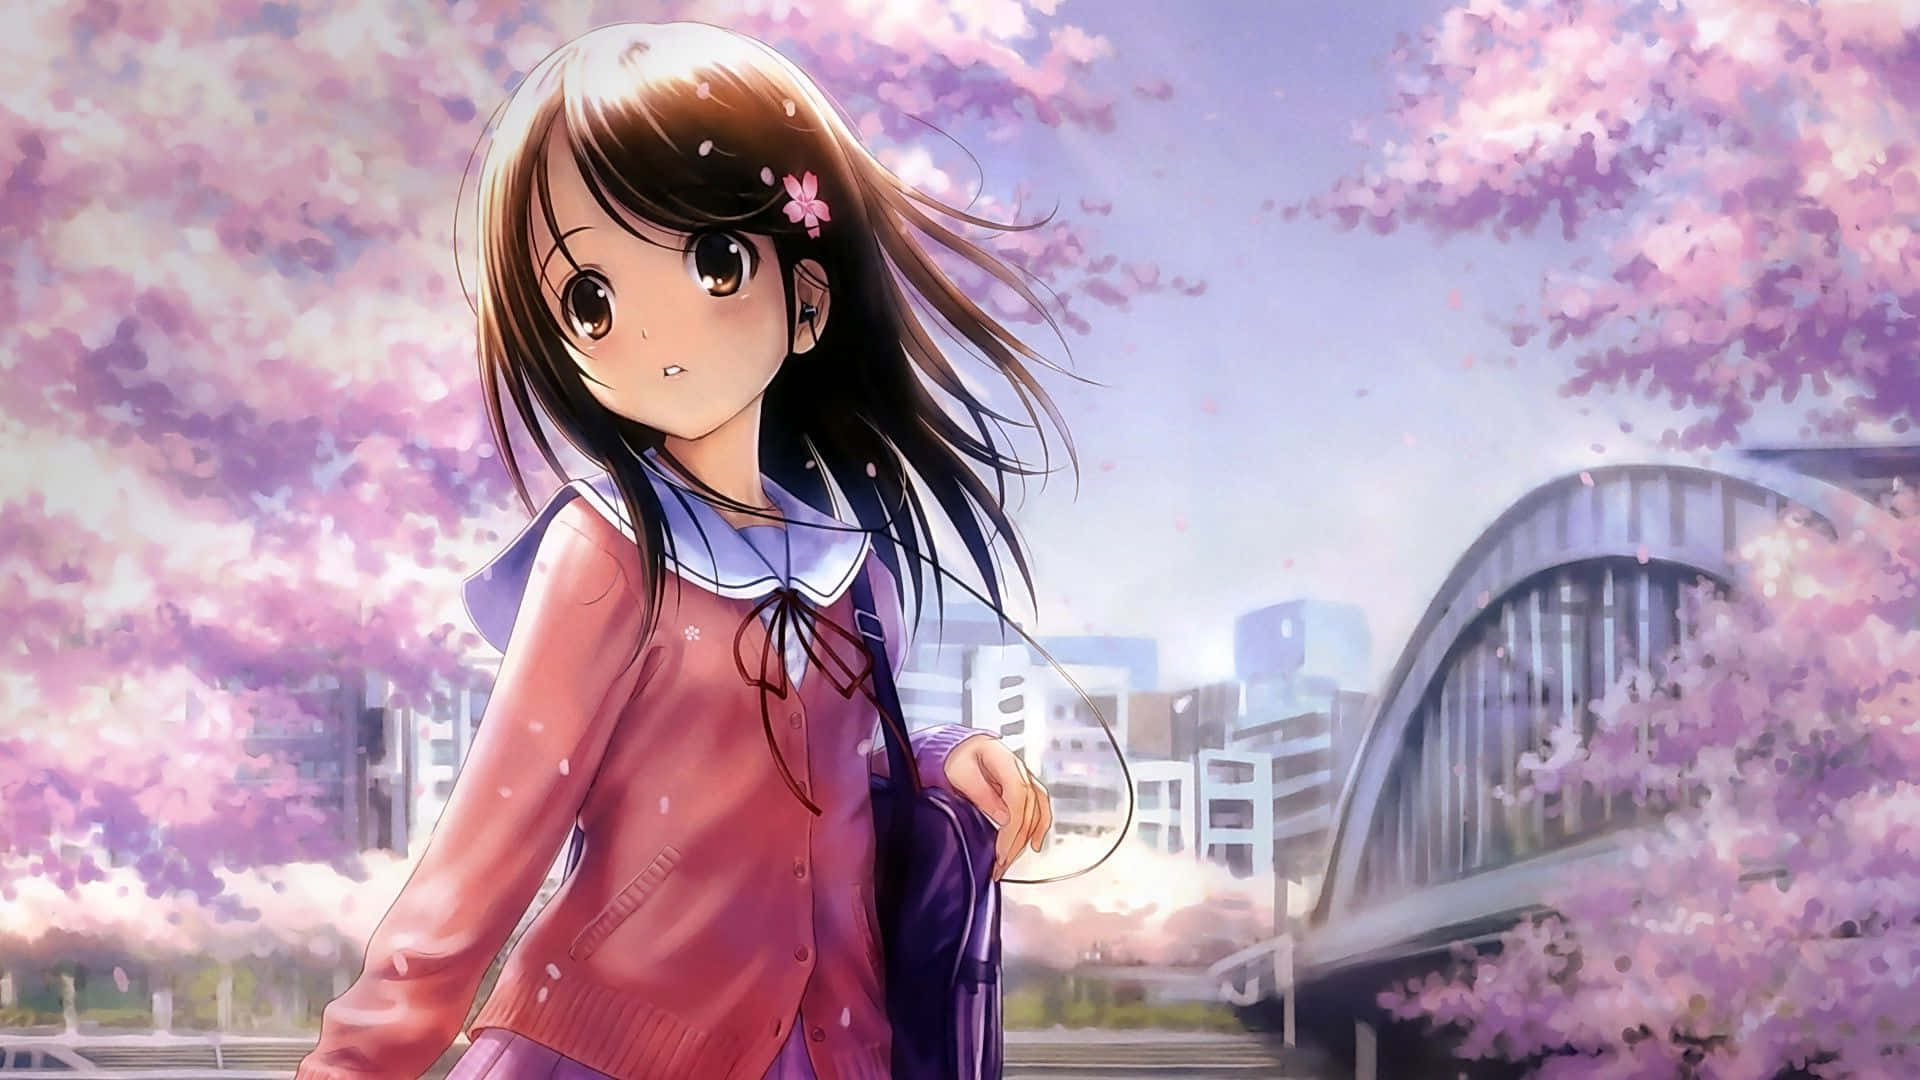 Anime Girl In Pink Dress Walking Through Cherry Blossoms Wallpaper